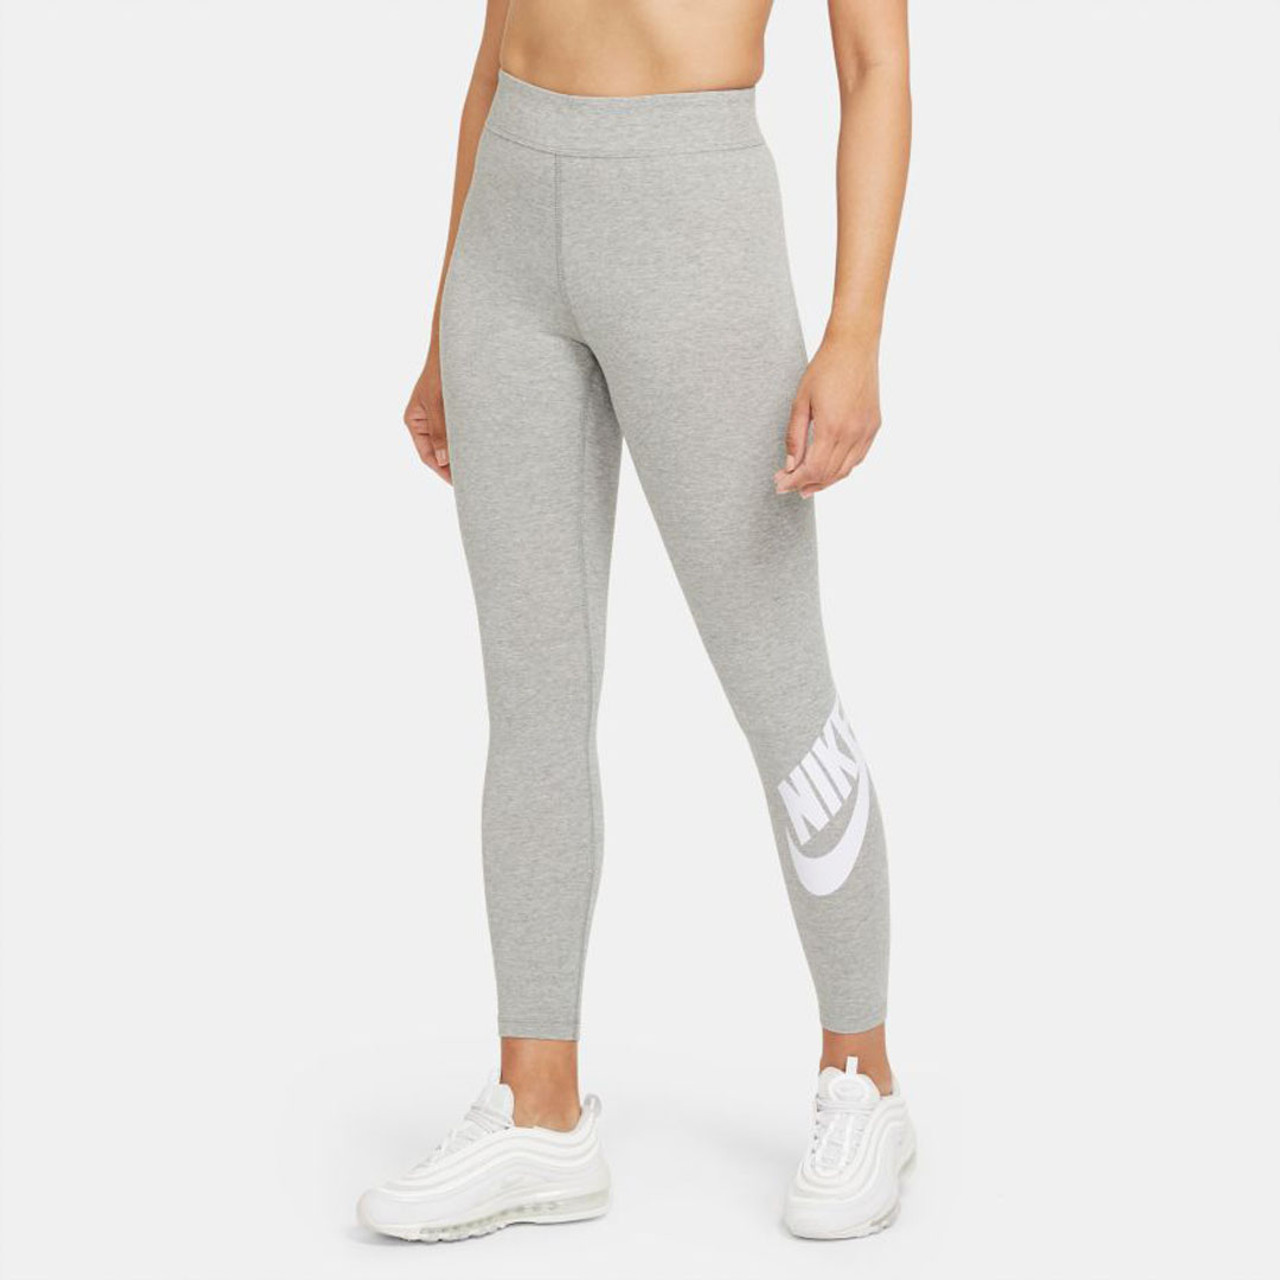 Gray leggings for women with maxi swoosh at the calf - NIKE - Pavidas